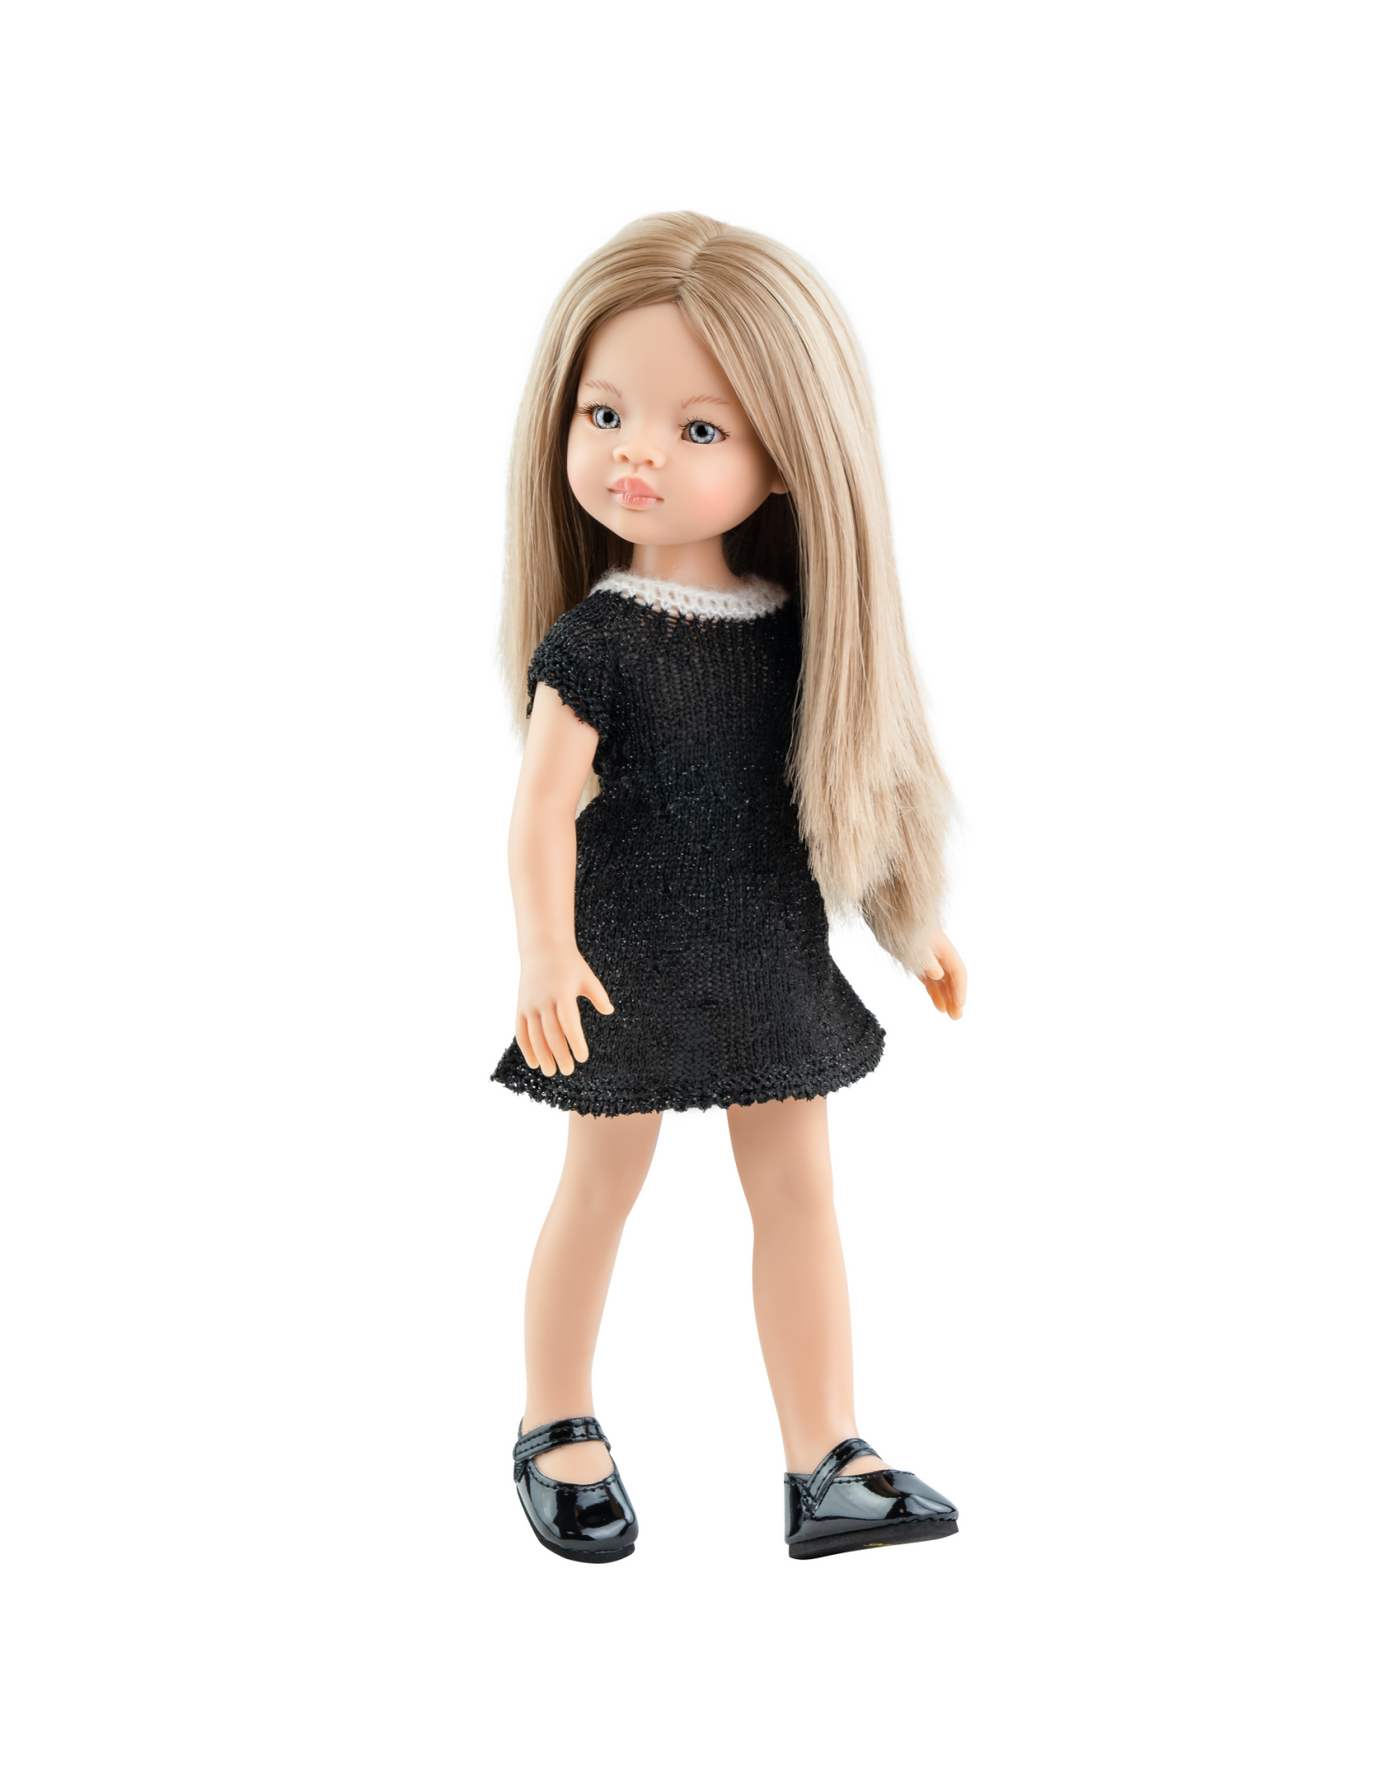 Las Amigas Doll - Manica with little black dress - Paola Reina